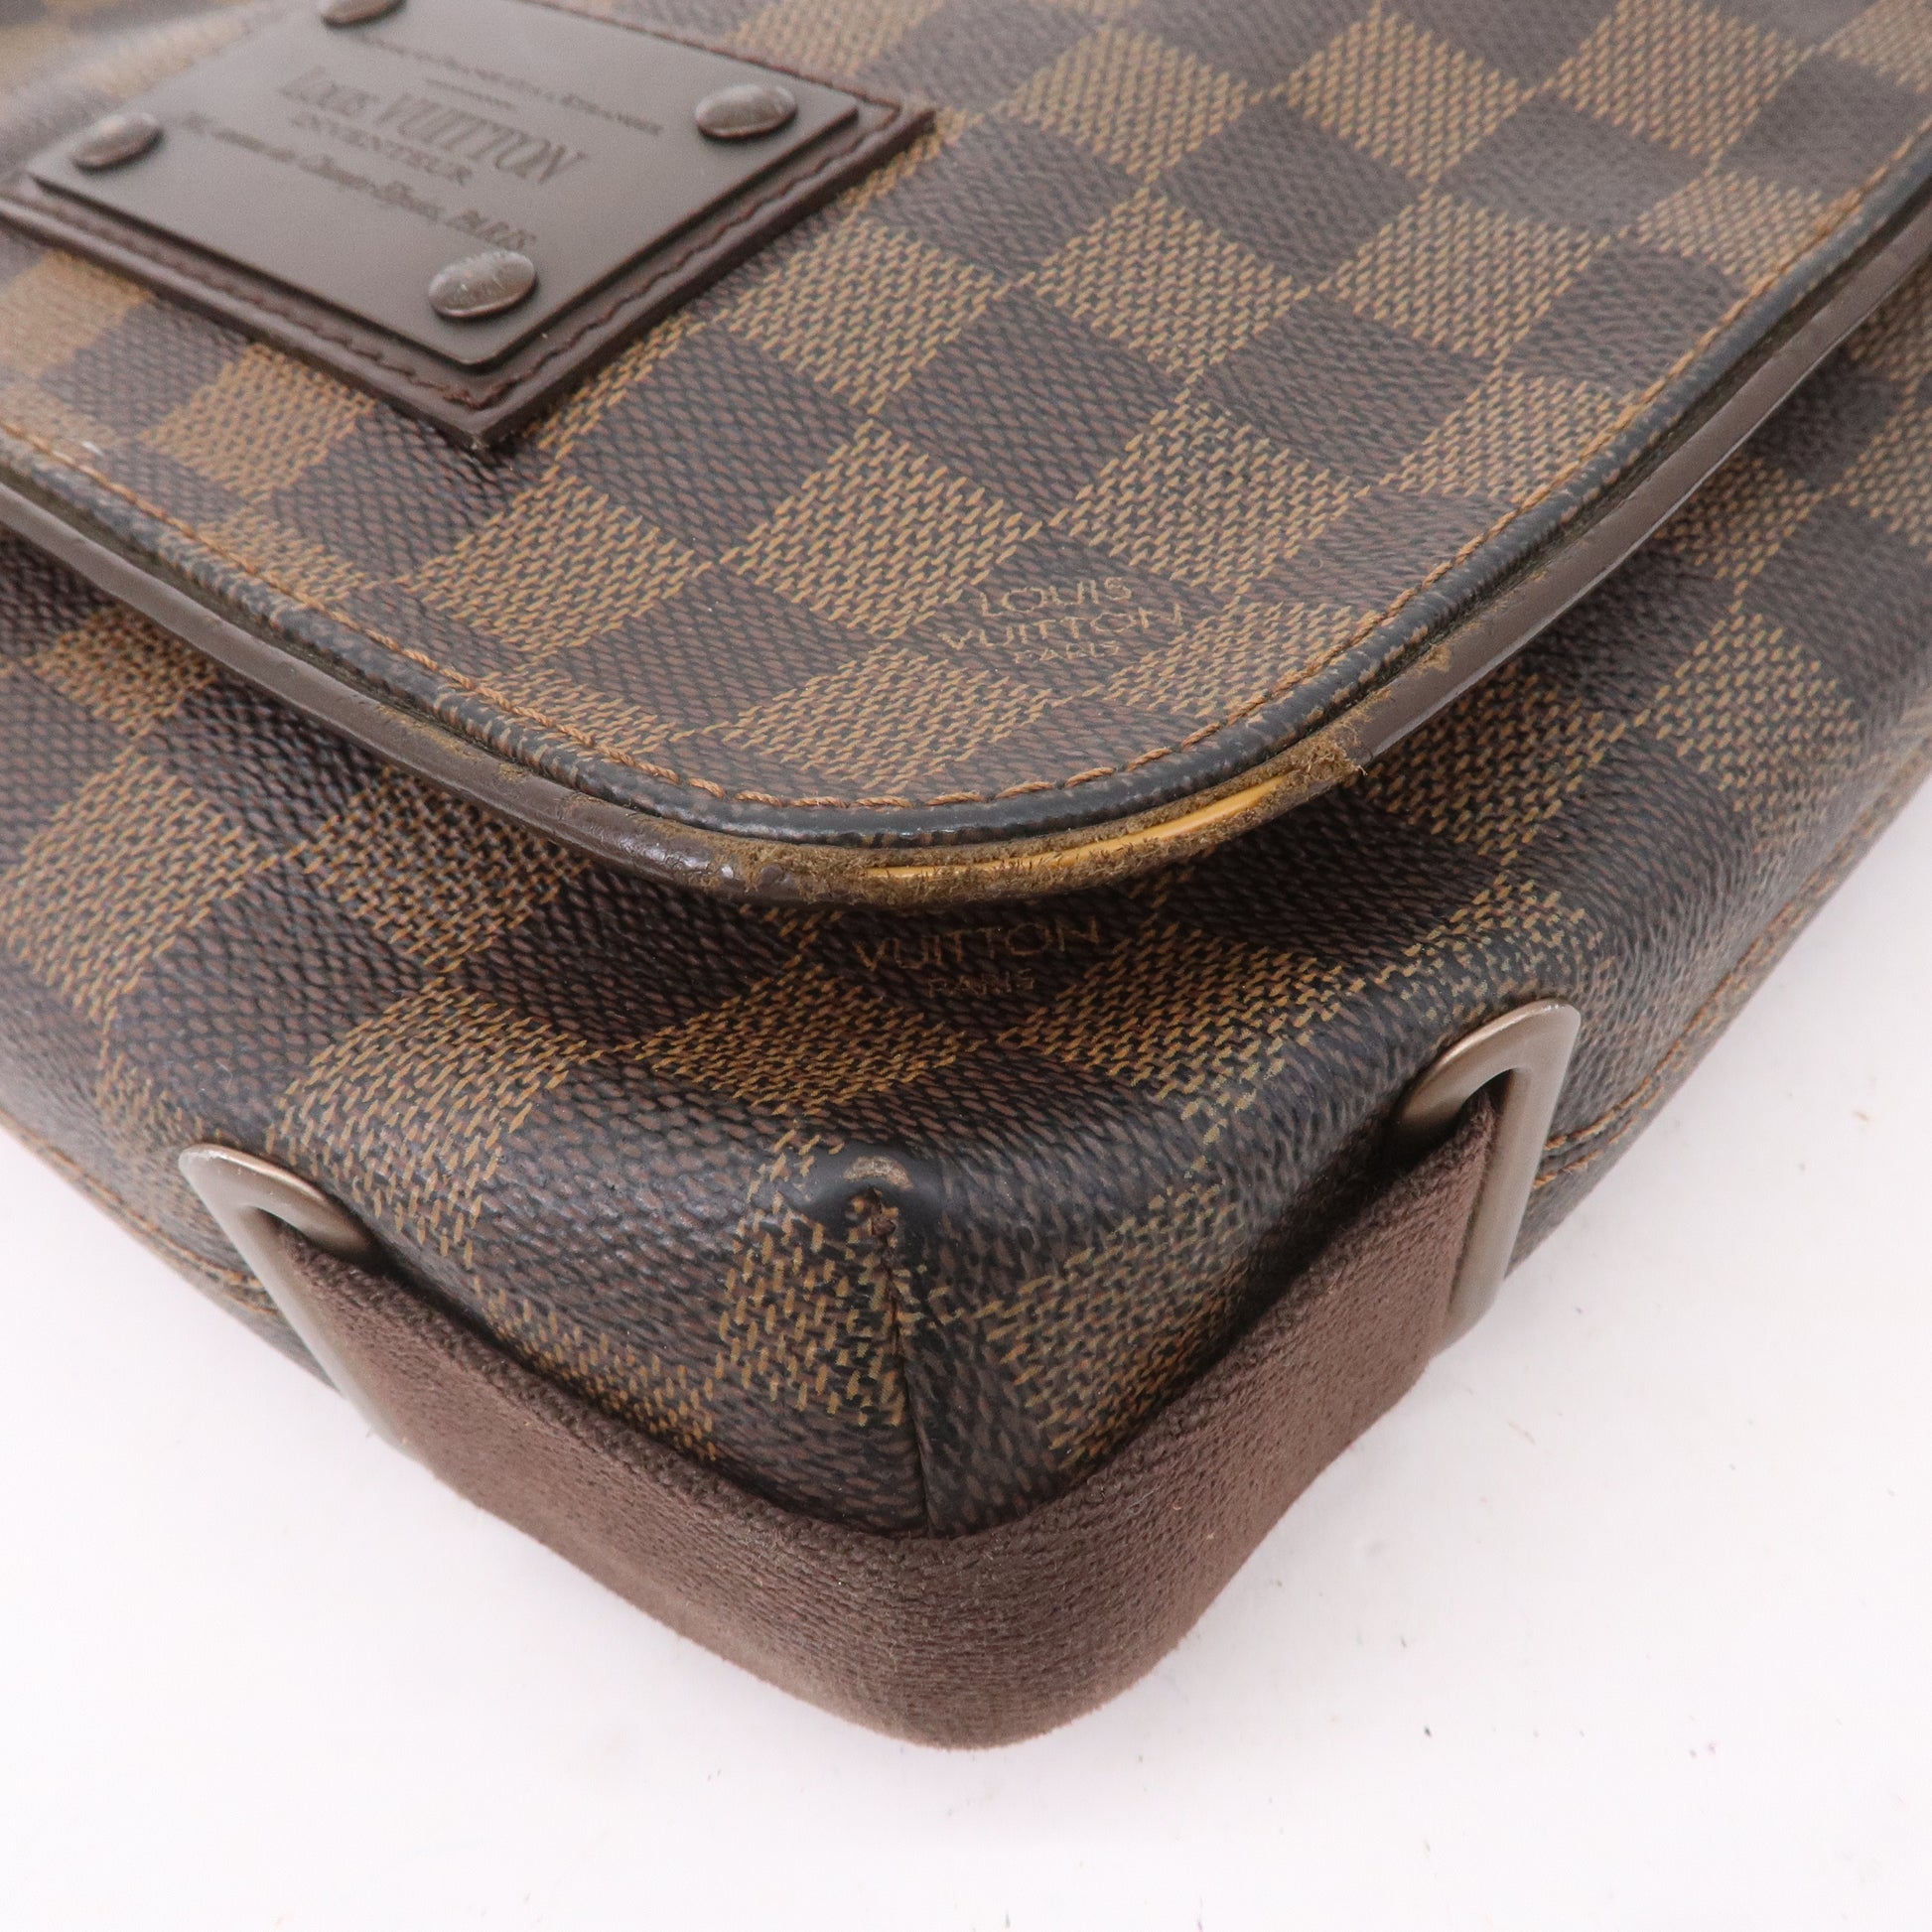 Louis Vuitton Brooklyn Damier Ebene PM Shoulder Bag on SALE